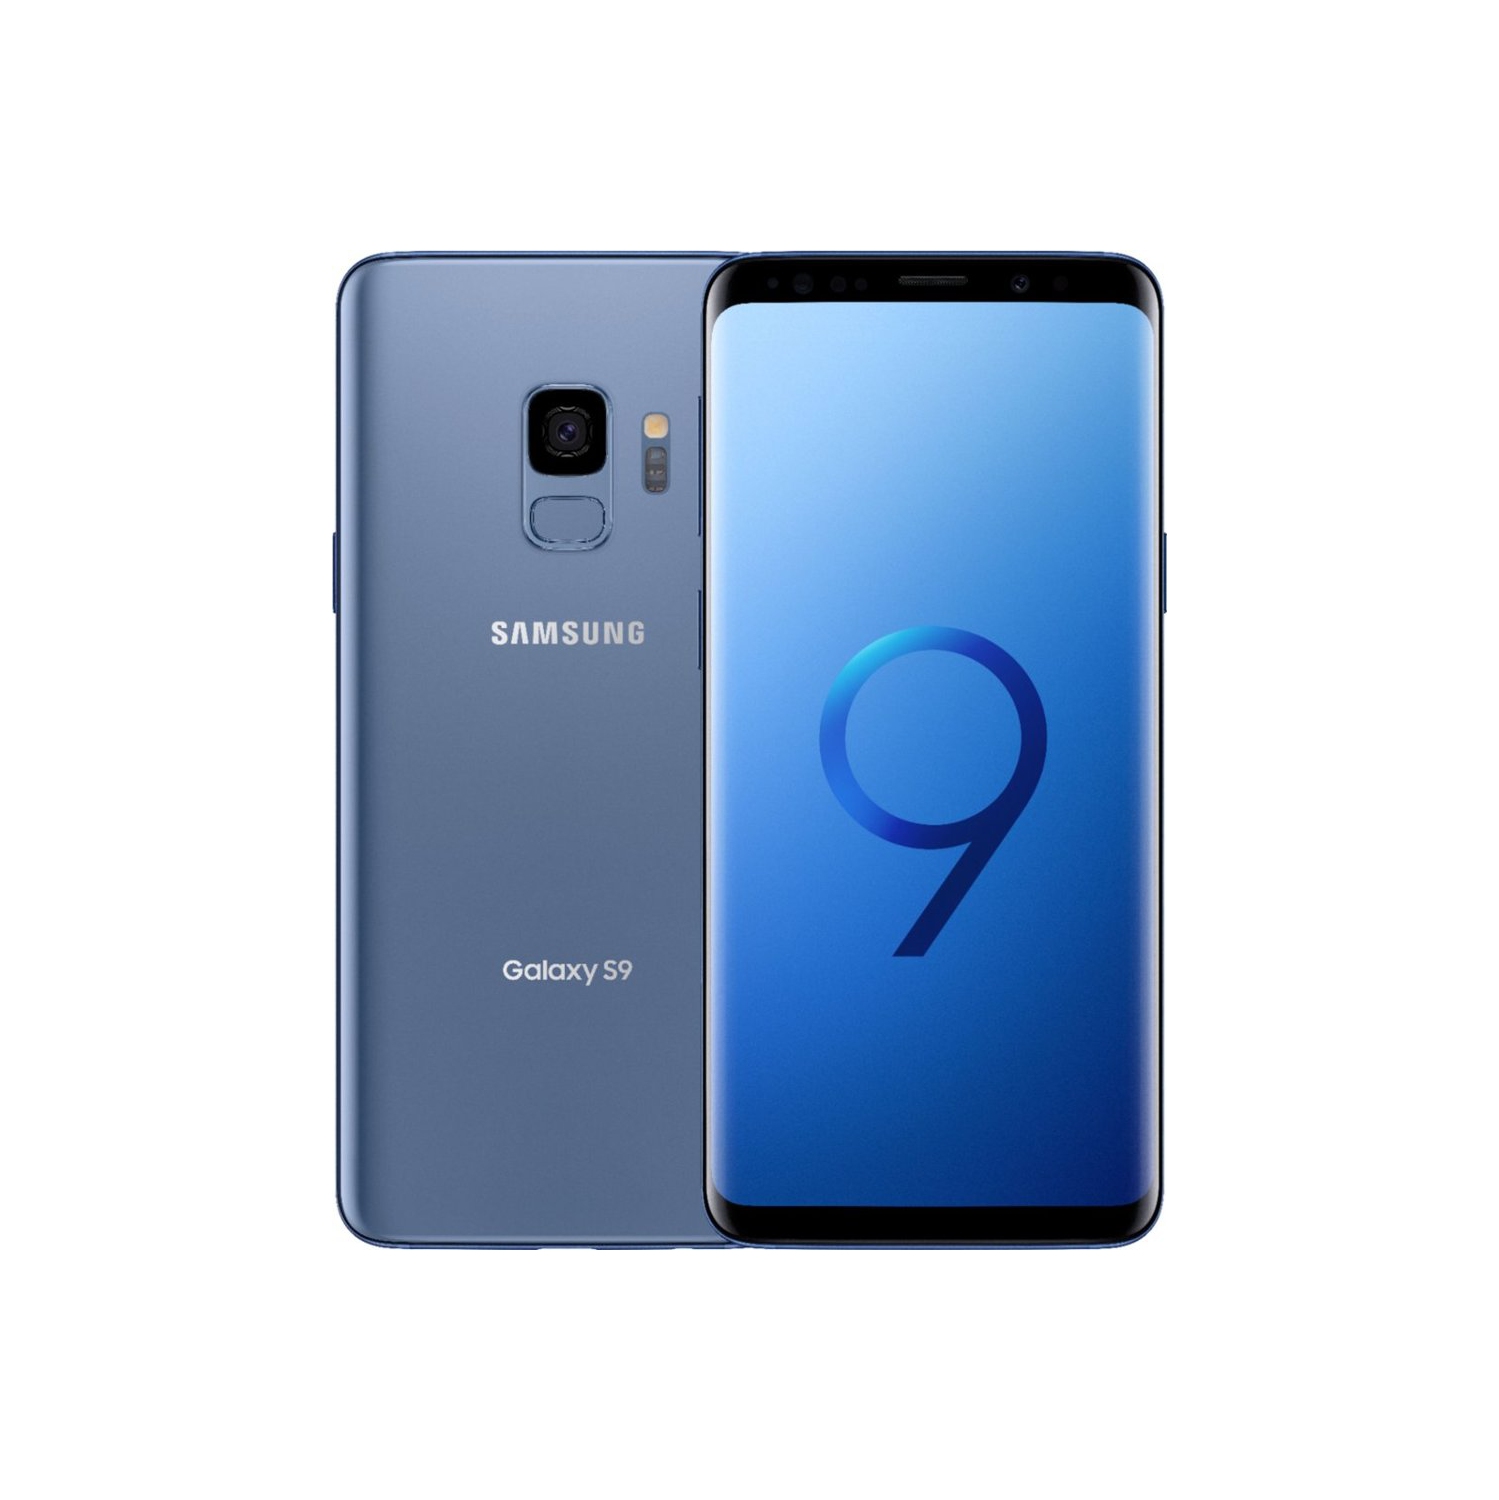 Refurbished (Good) - Samsung Galaxy S9 64GB Smartphone - Coral Blue - Unlocked